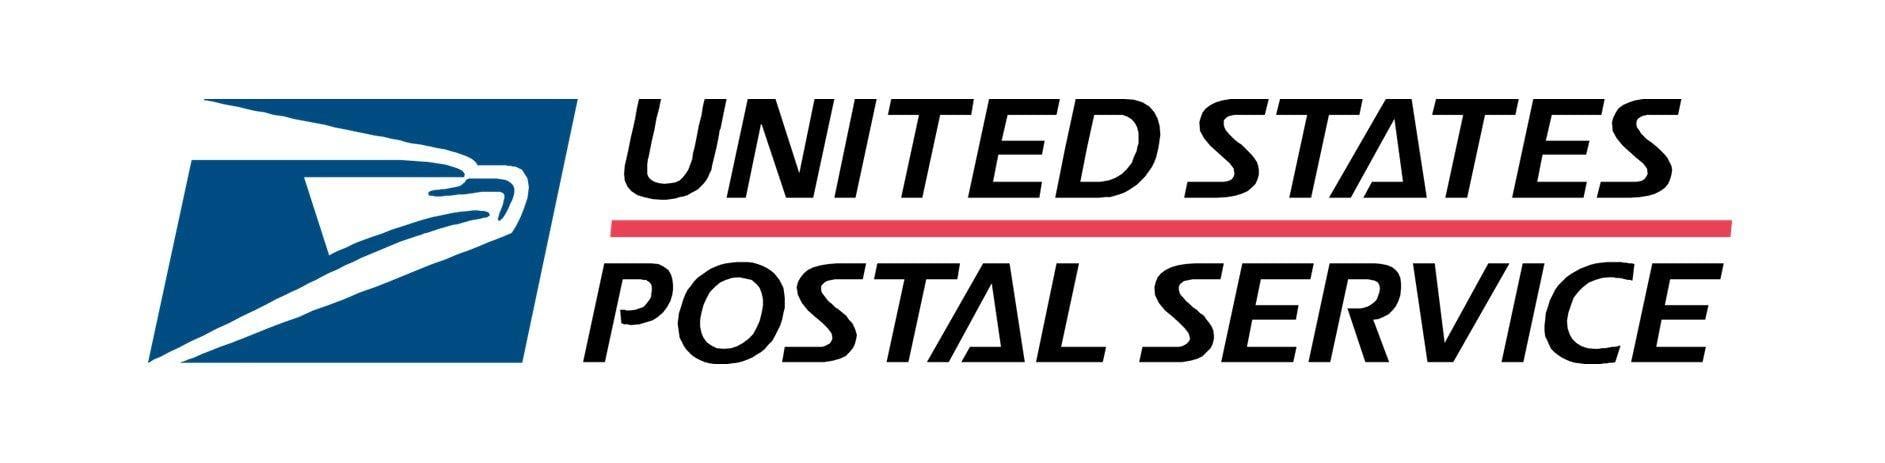 USPS Letterhead Logo - Service Logo Usps Postal